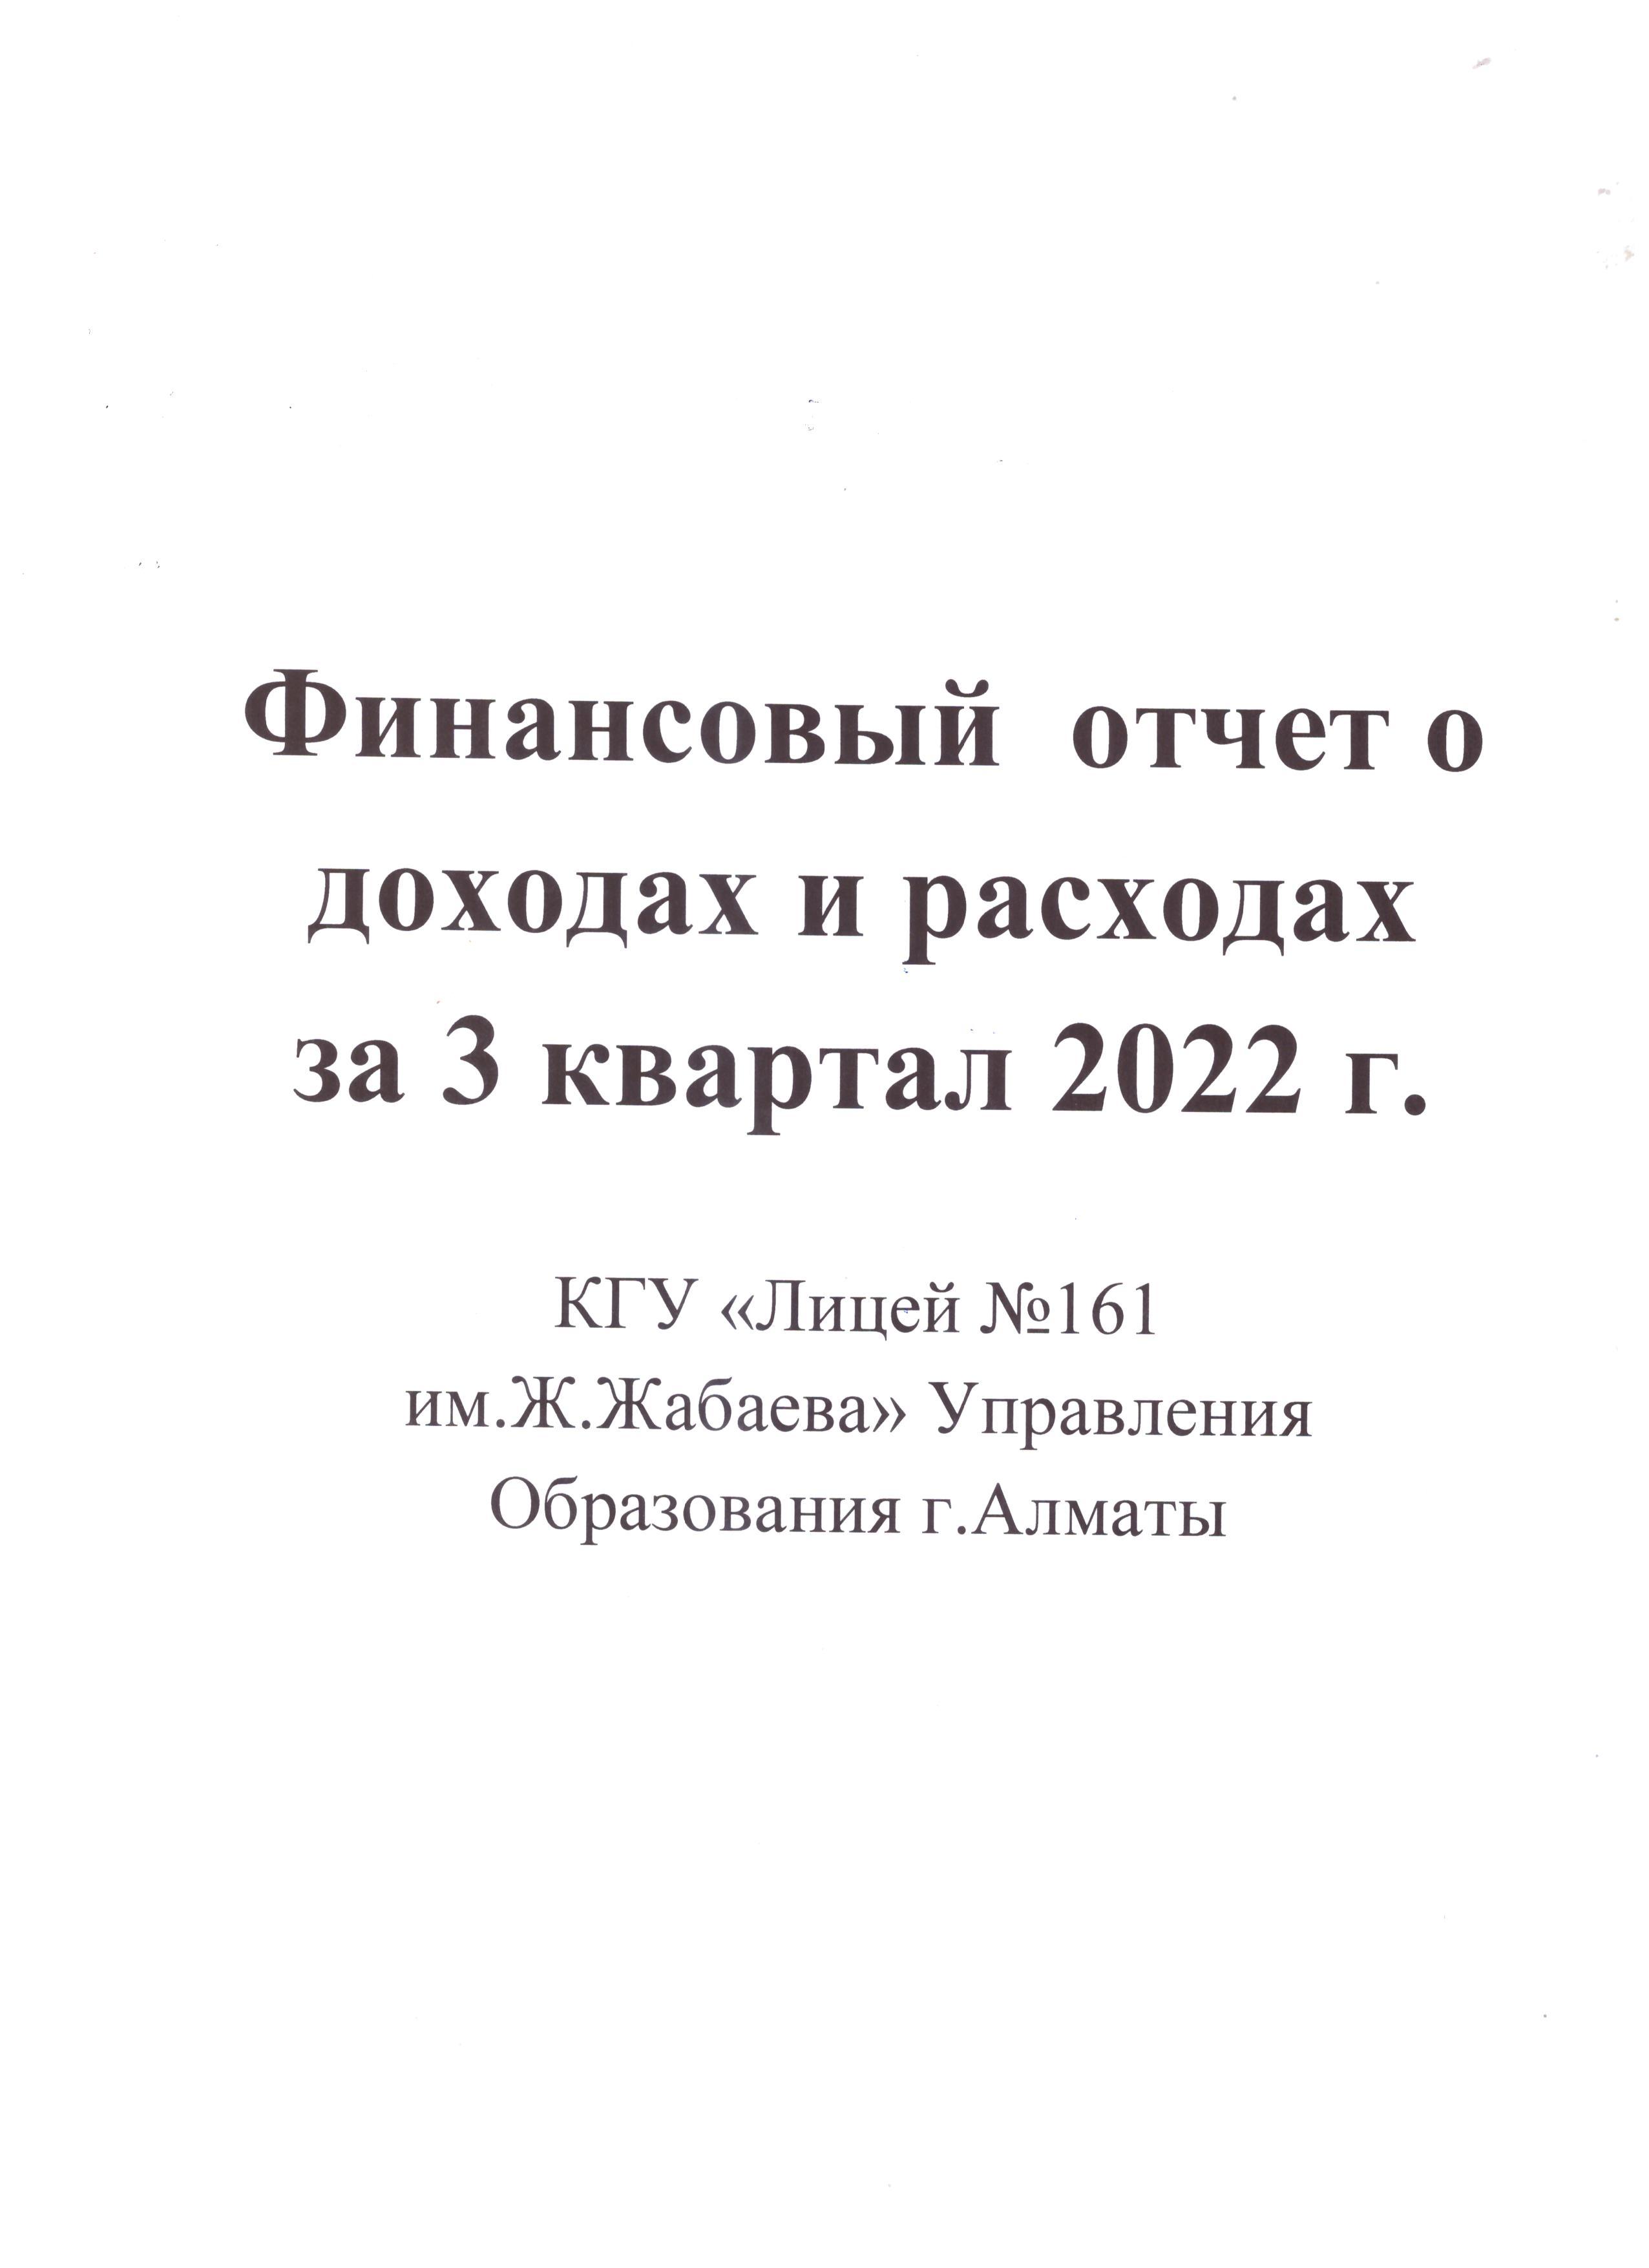 Отчет о доходах и расходах за 3 квартал 2022 года